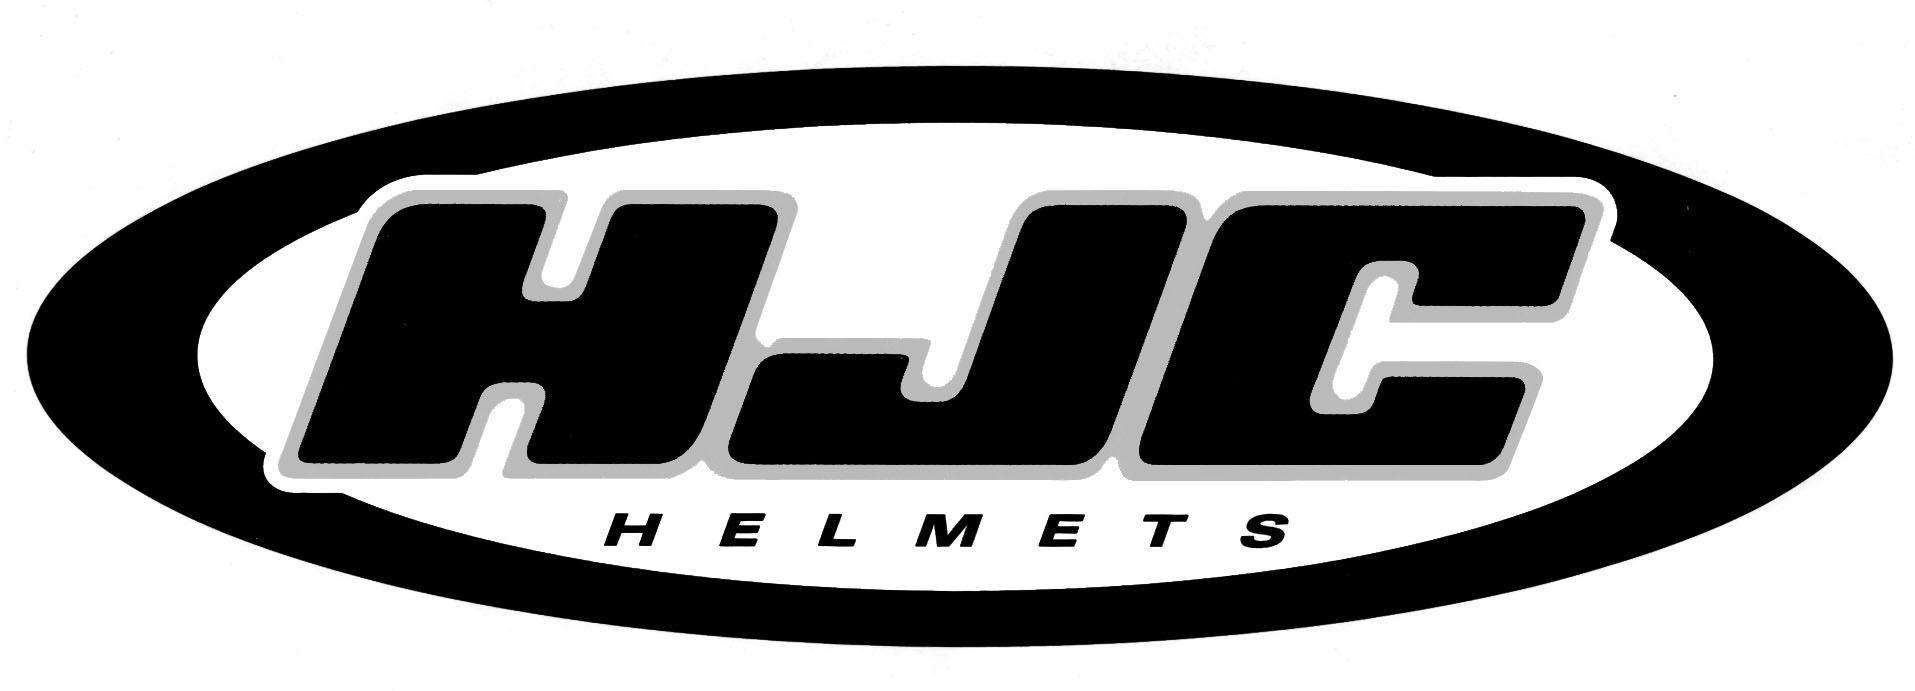 Helmets Logo - hjc helmet logo Helmets. Hjc helmets, Helmet